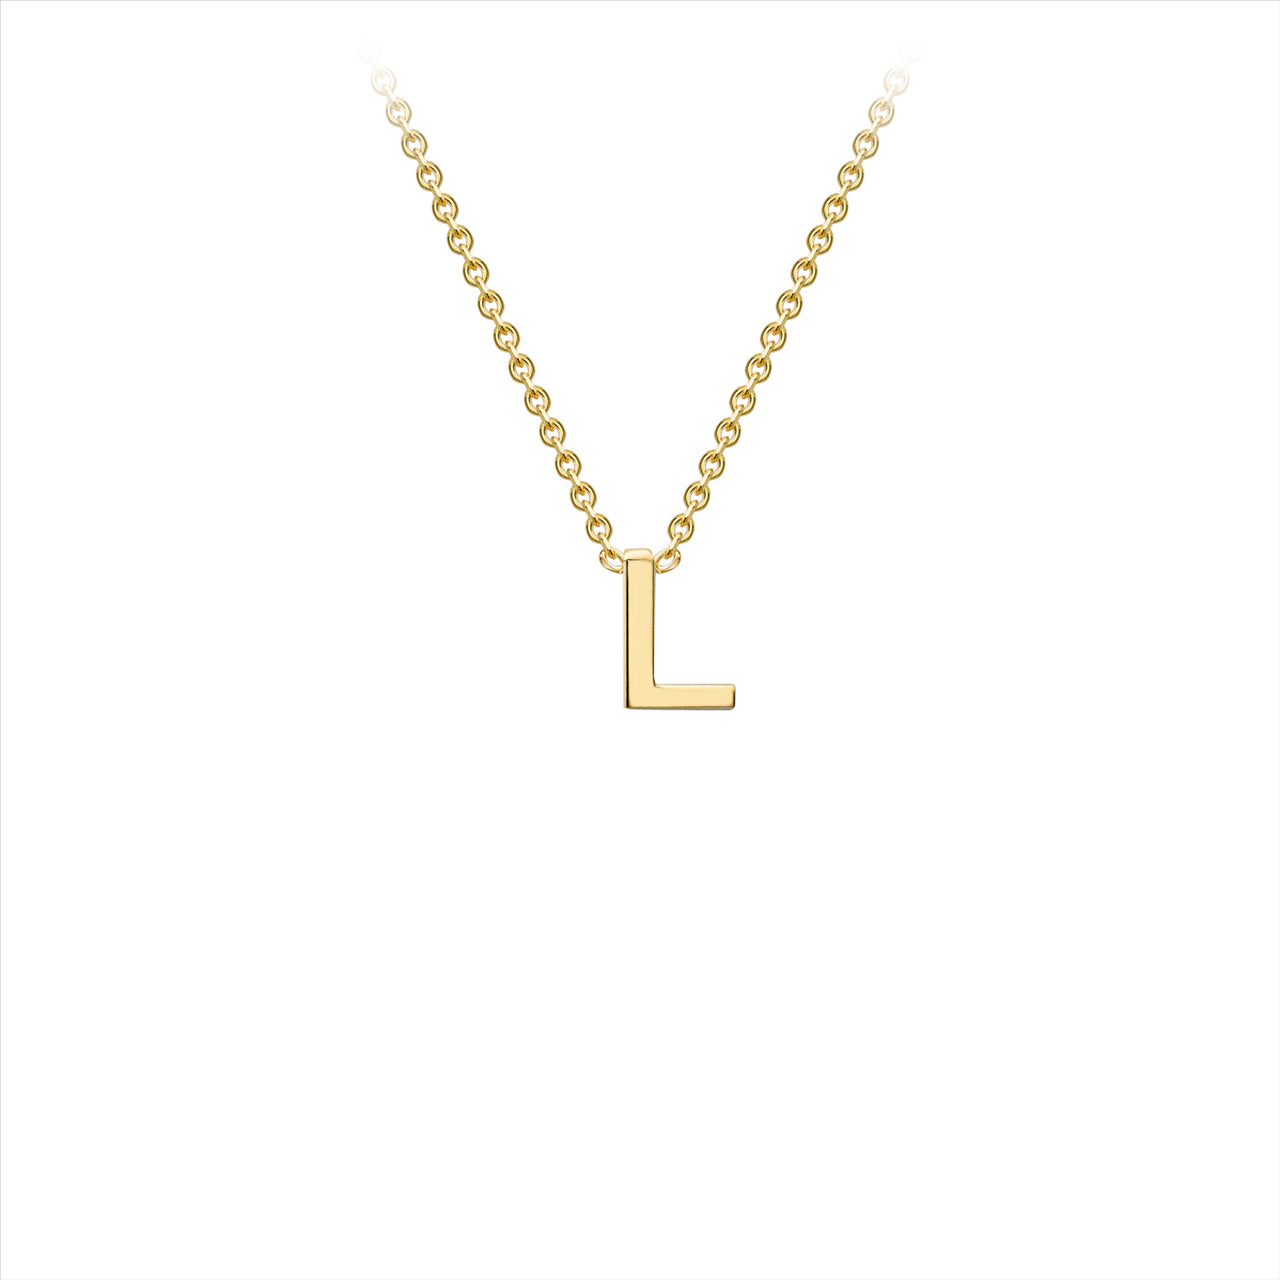 9K Yellow Gold 'L' Initial Adjustable Necklace 38cm-43cm